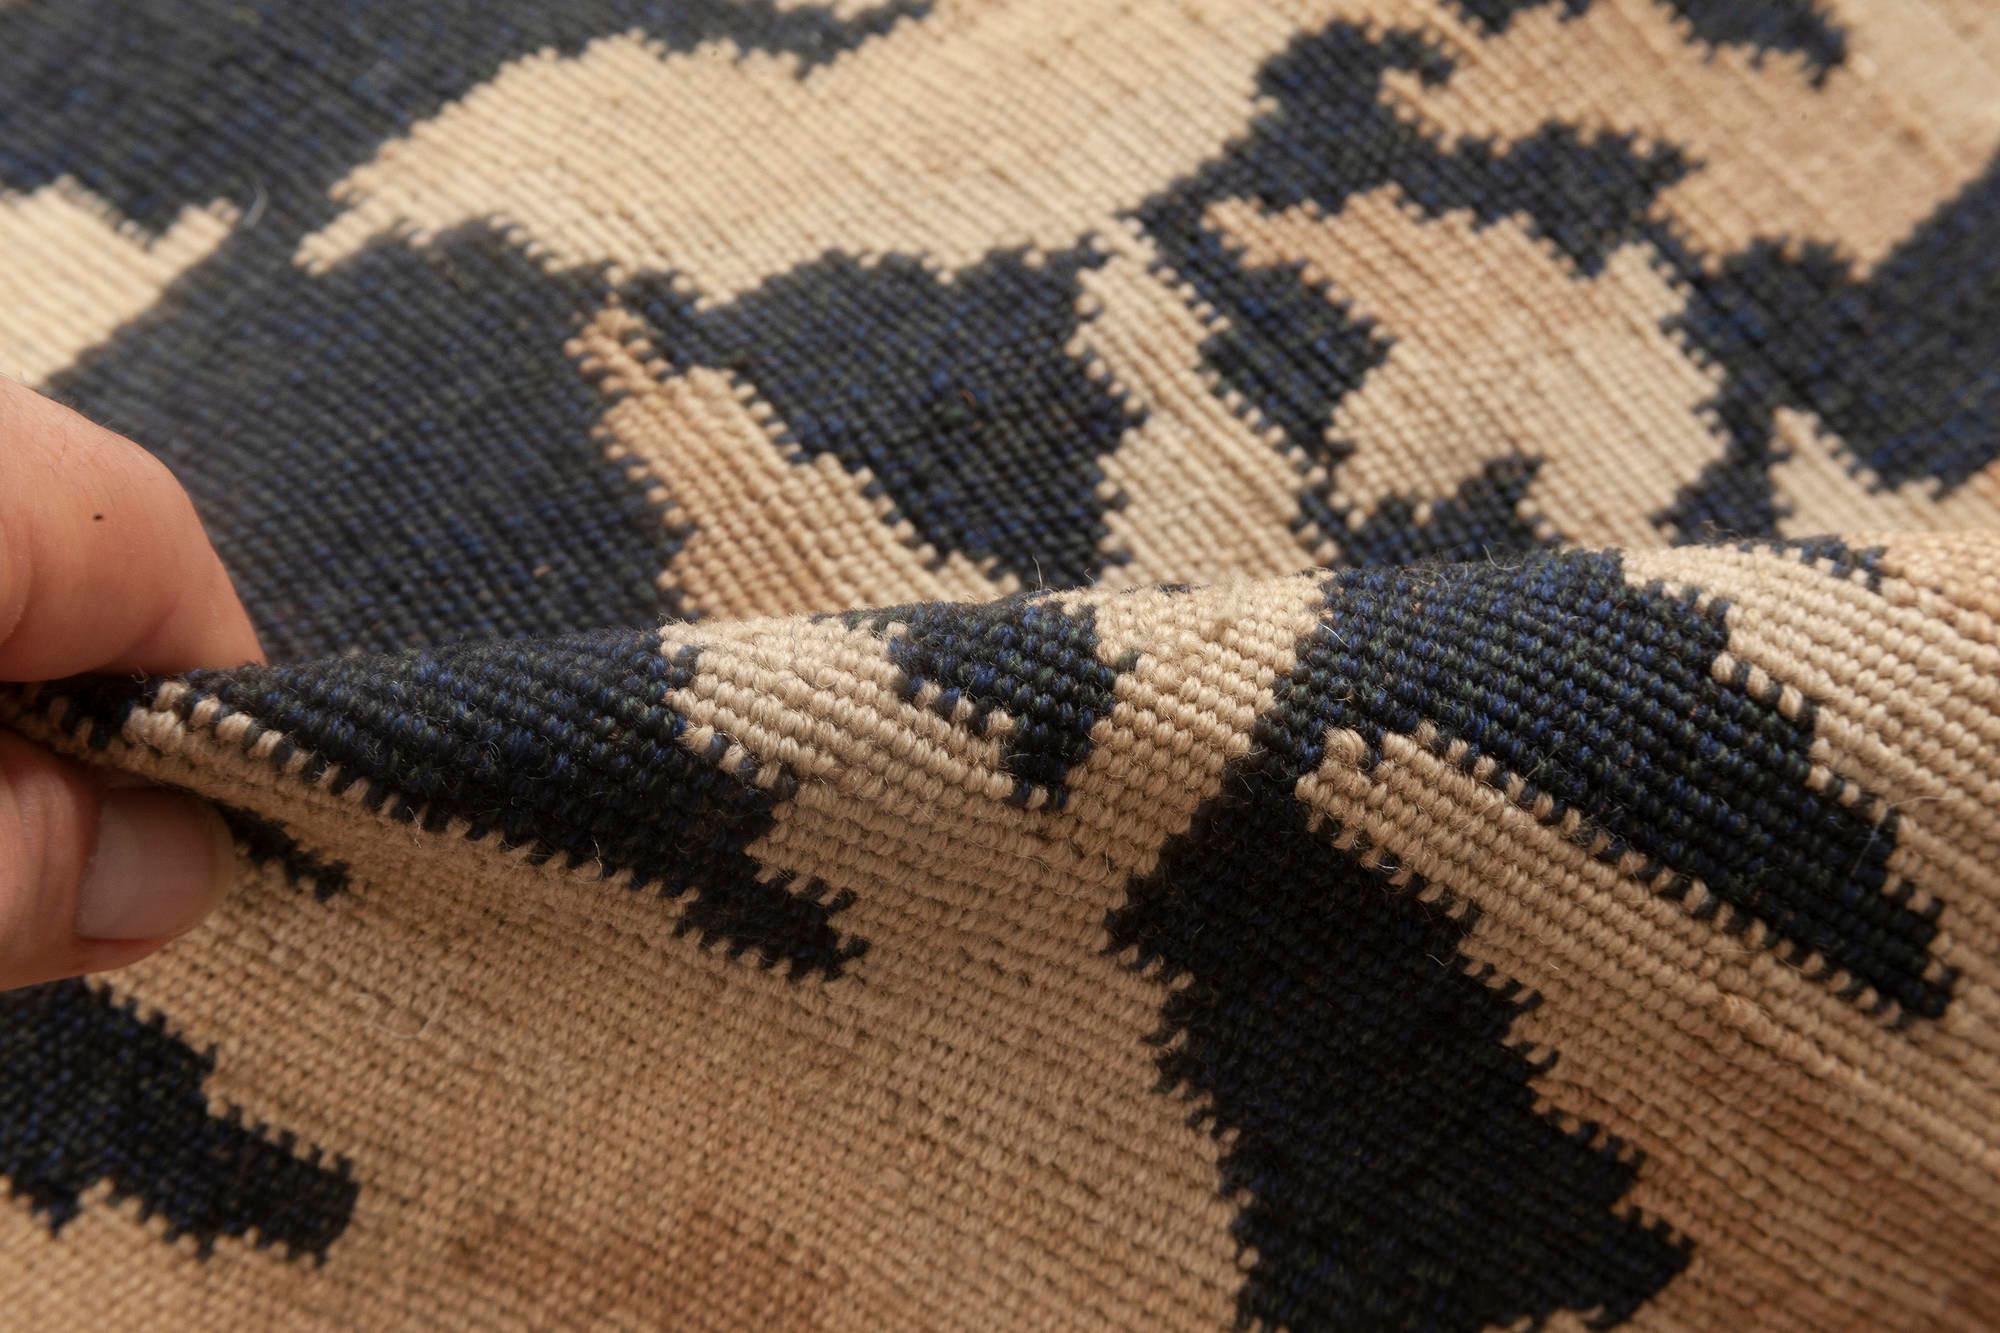 Contemporary floral bessarabian design handmade wool rug by Doris Leslie Blau.
Size : 6'10